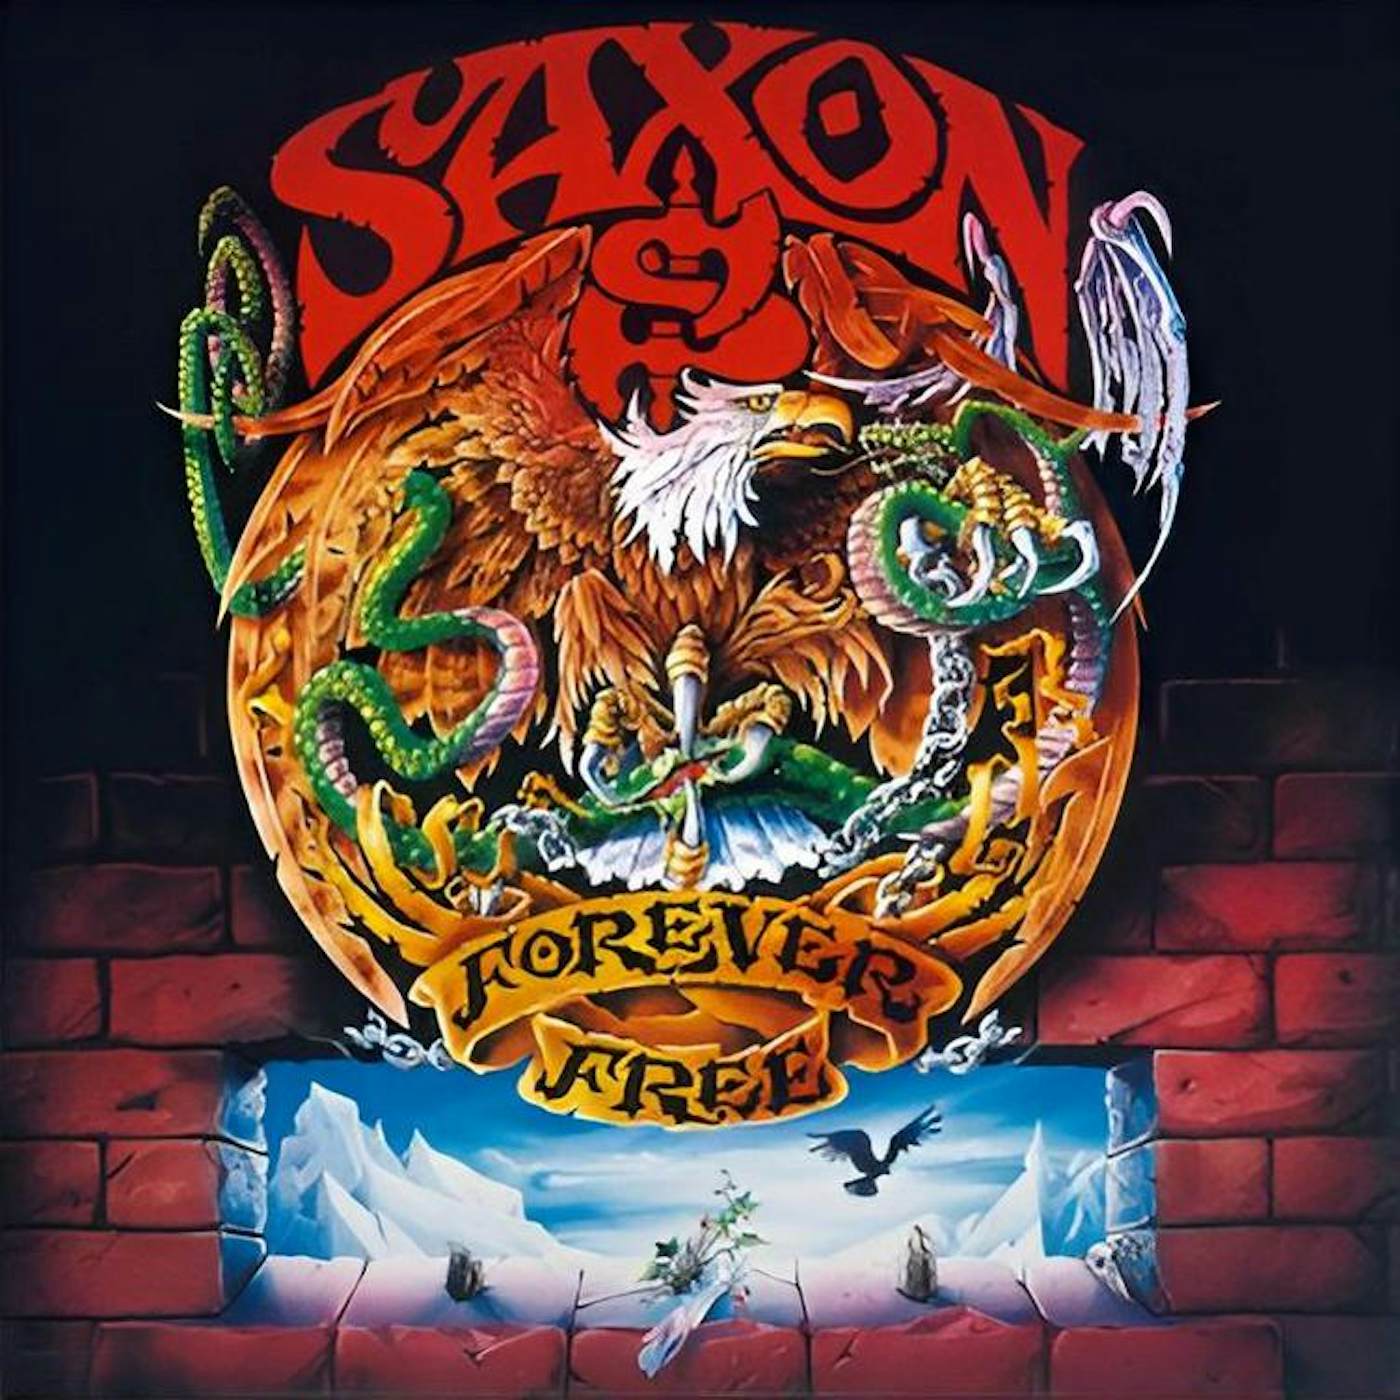 Saxon Forever Free (Translucent Blue/180G) Vinyl Record